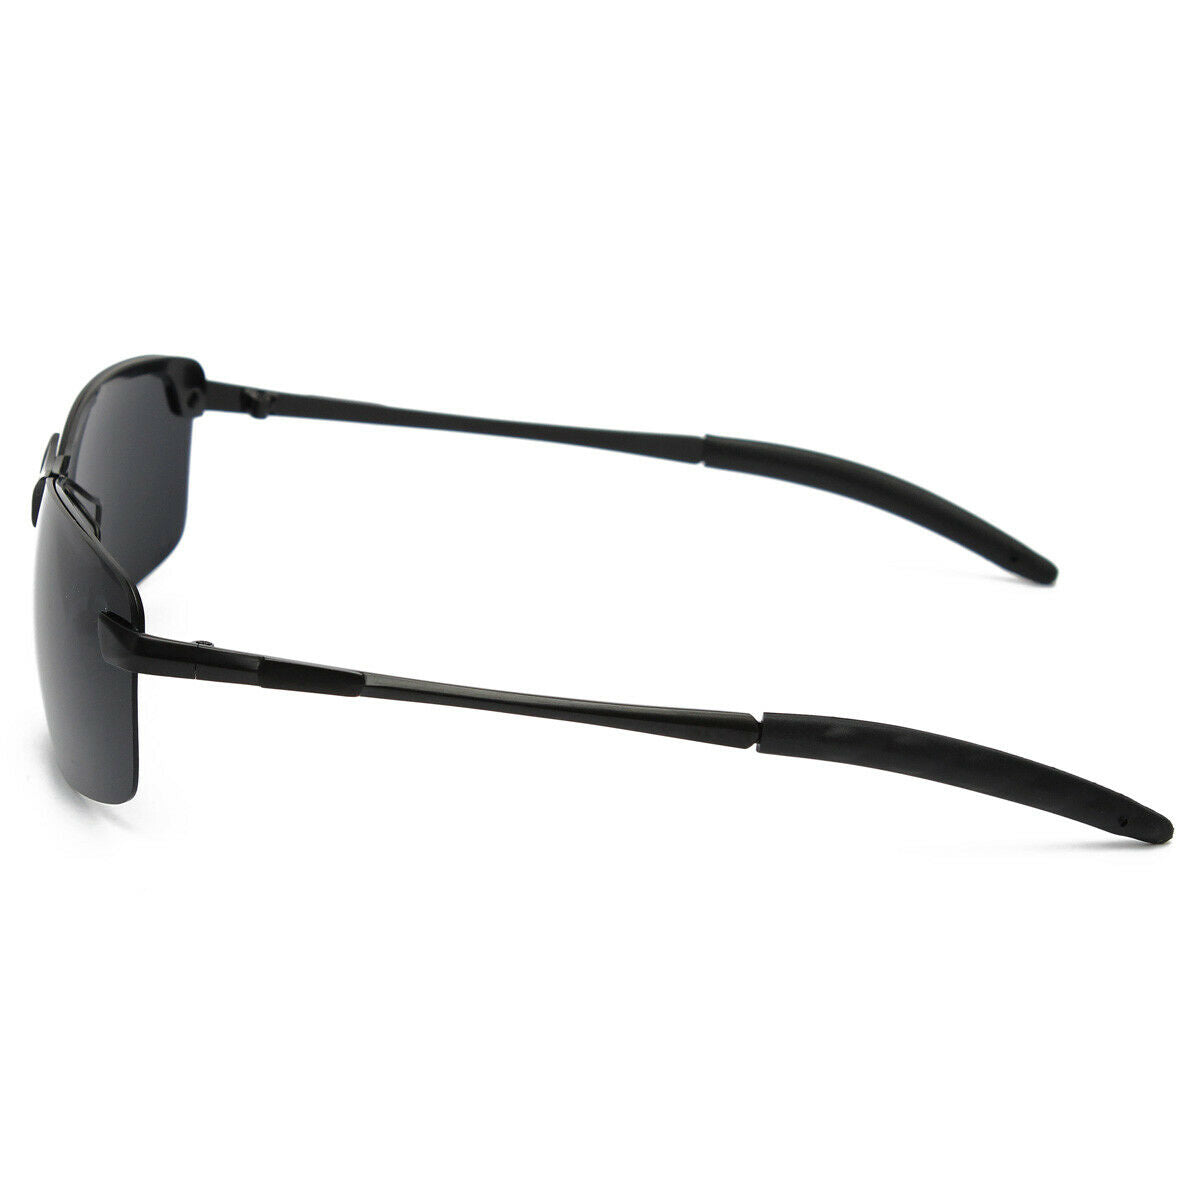 Outdoor Polarized UV400 Sunglasses Driving Eyewear Glasses Unisex Drivers Black